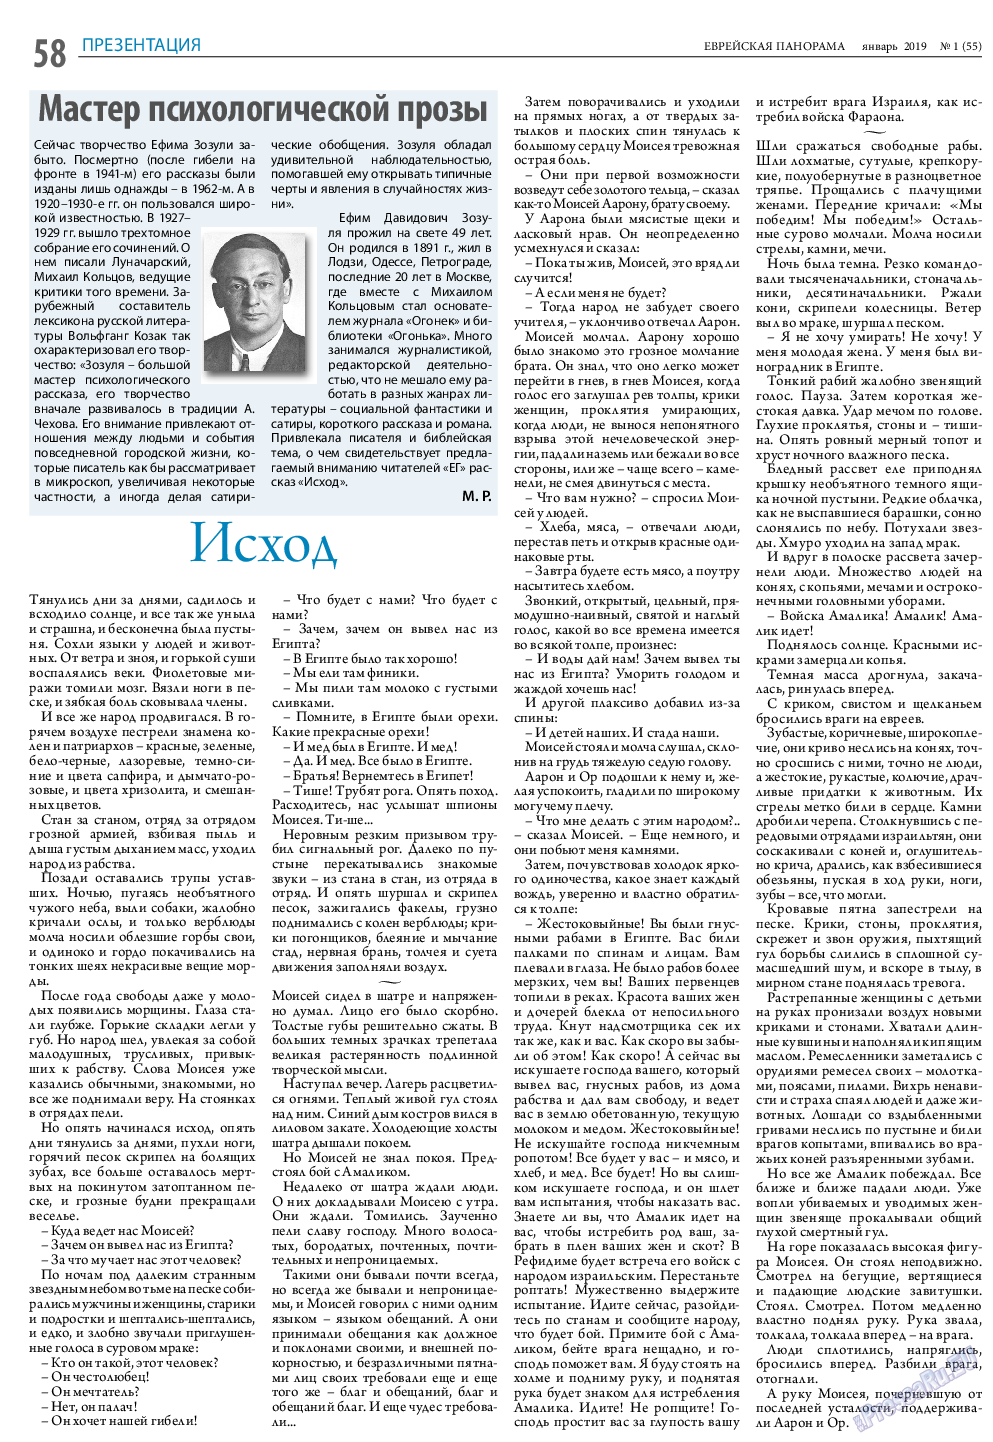 Еврейская панорама, газета. 2019 №1 стр.58